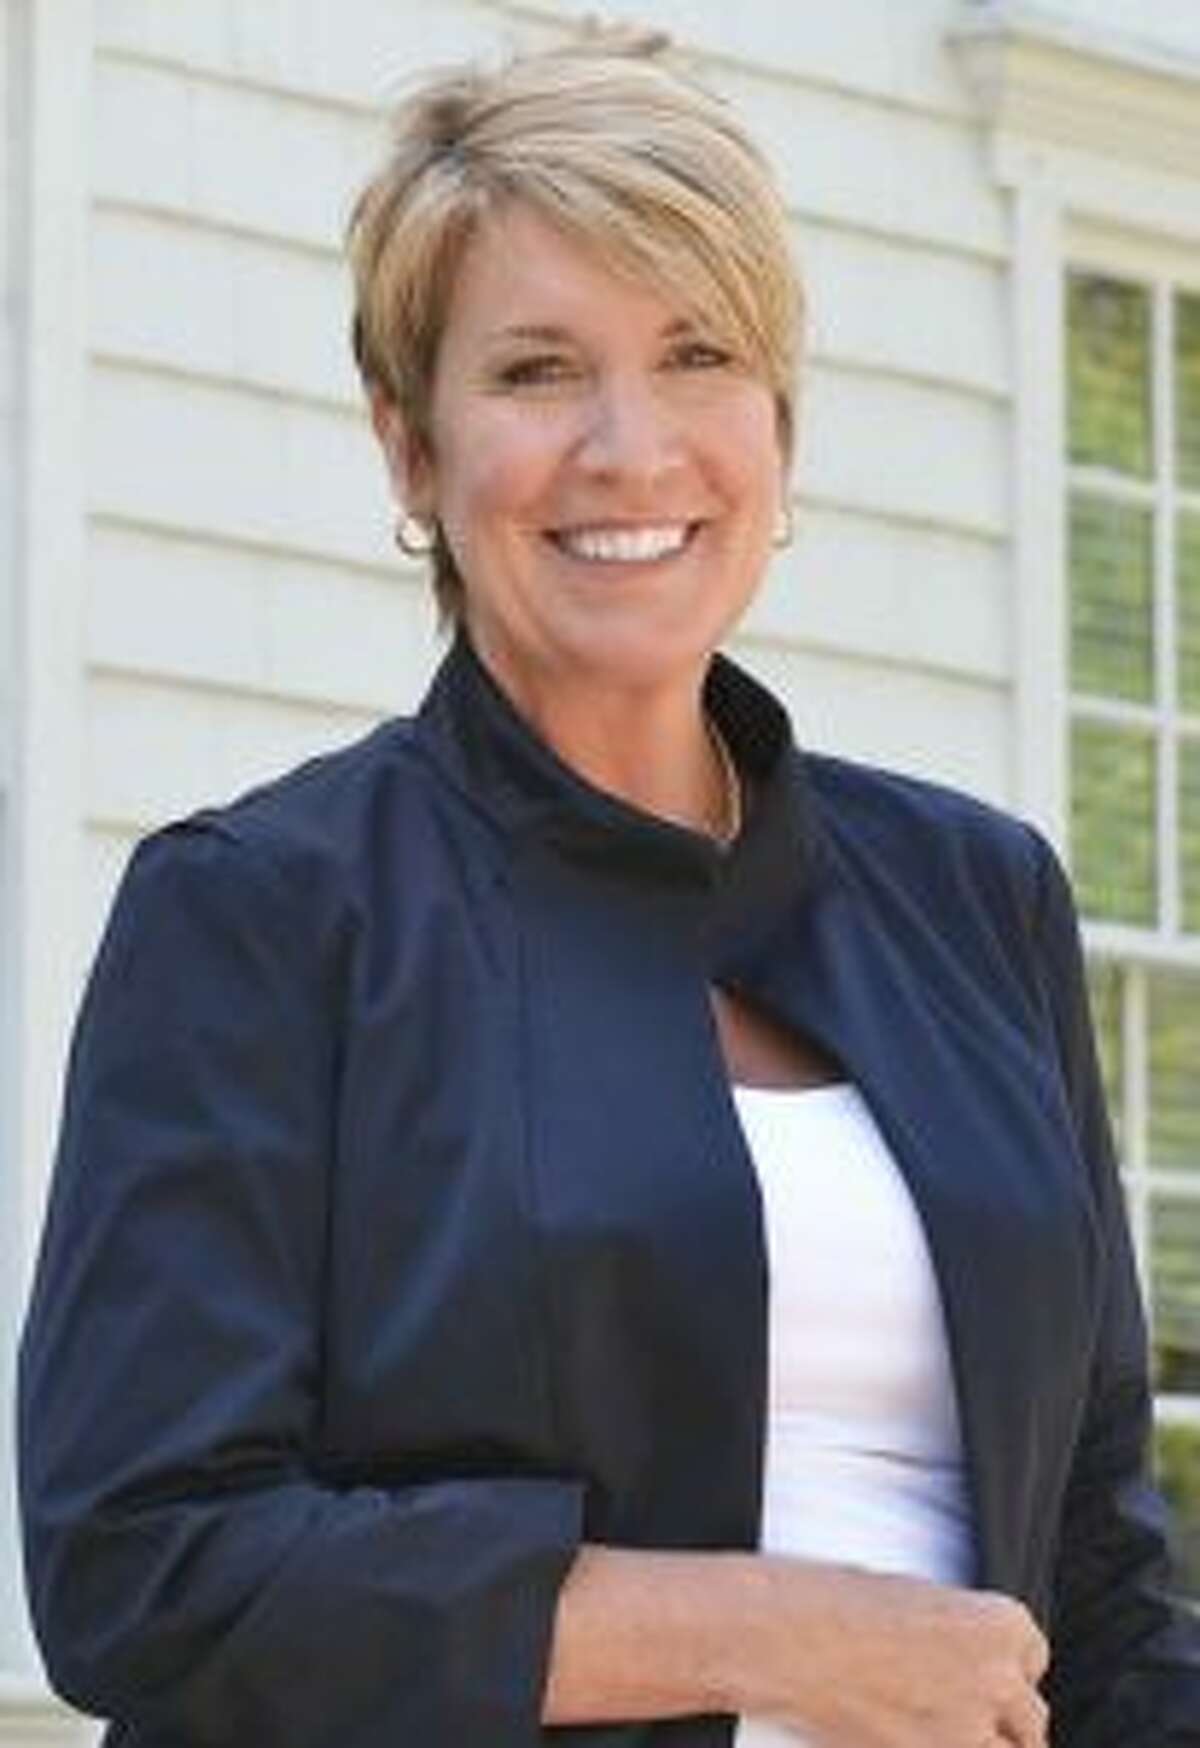 State Representative Laura Devlin